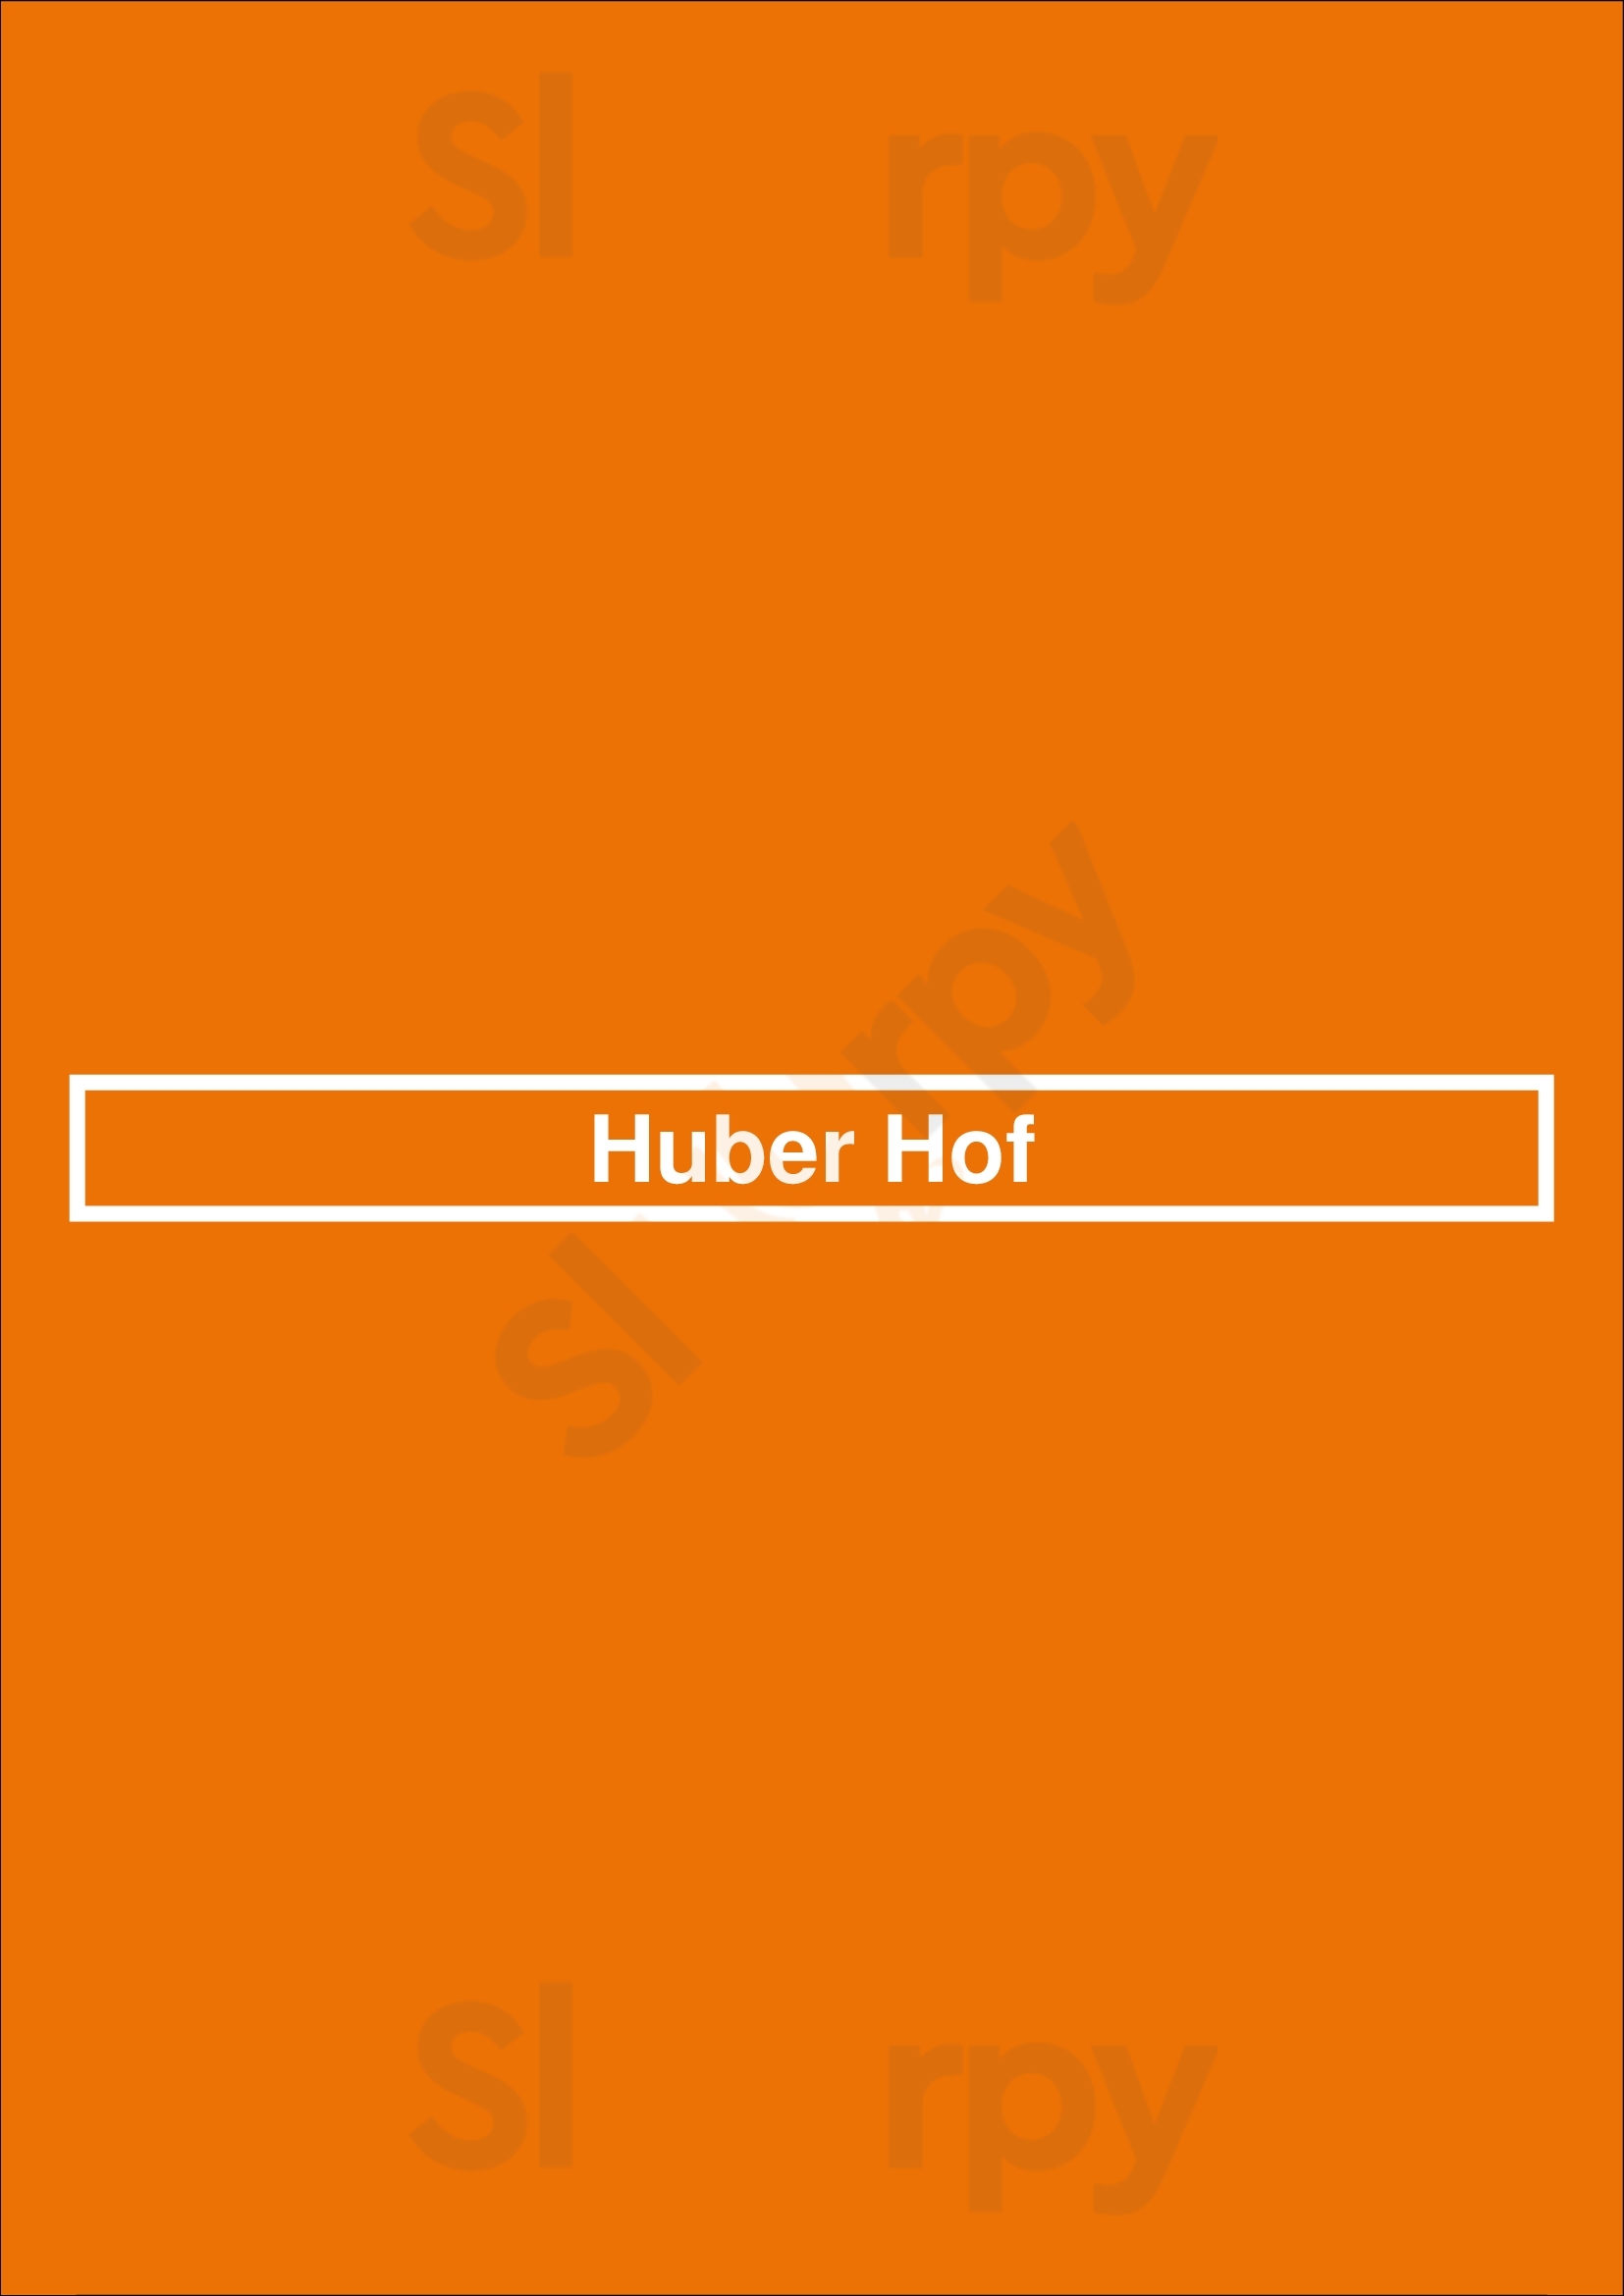 Huber Hof Iffezheim Menu - 1